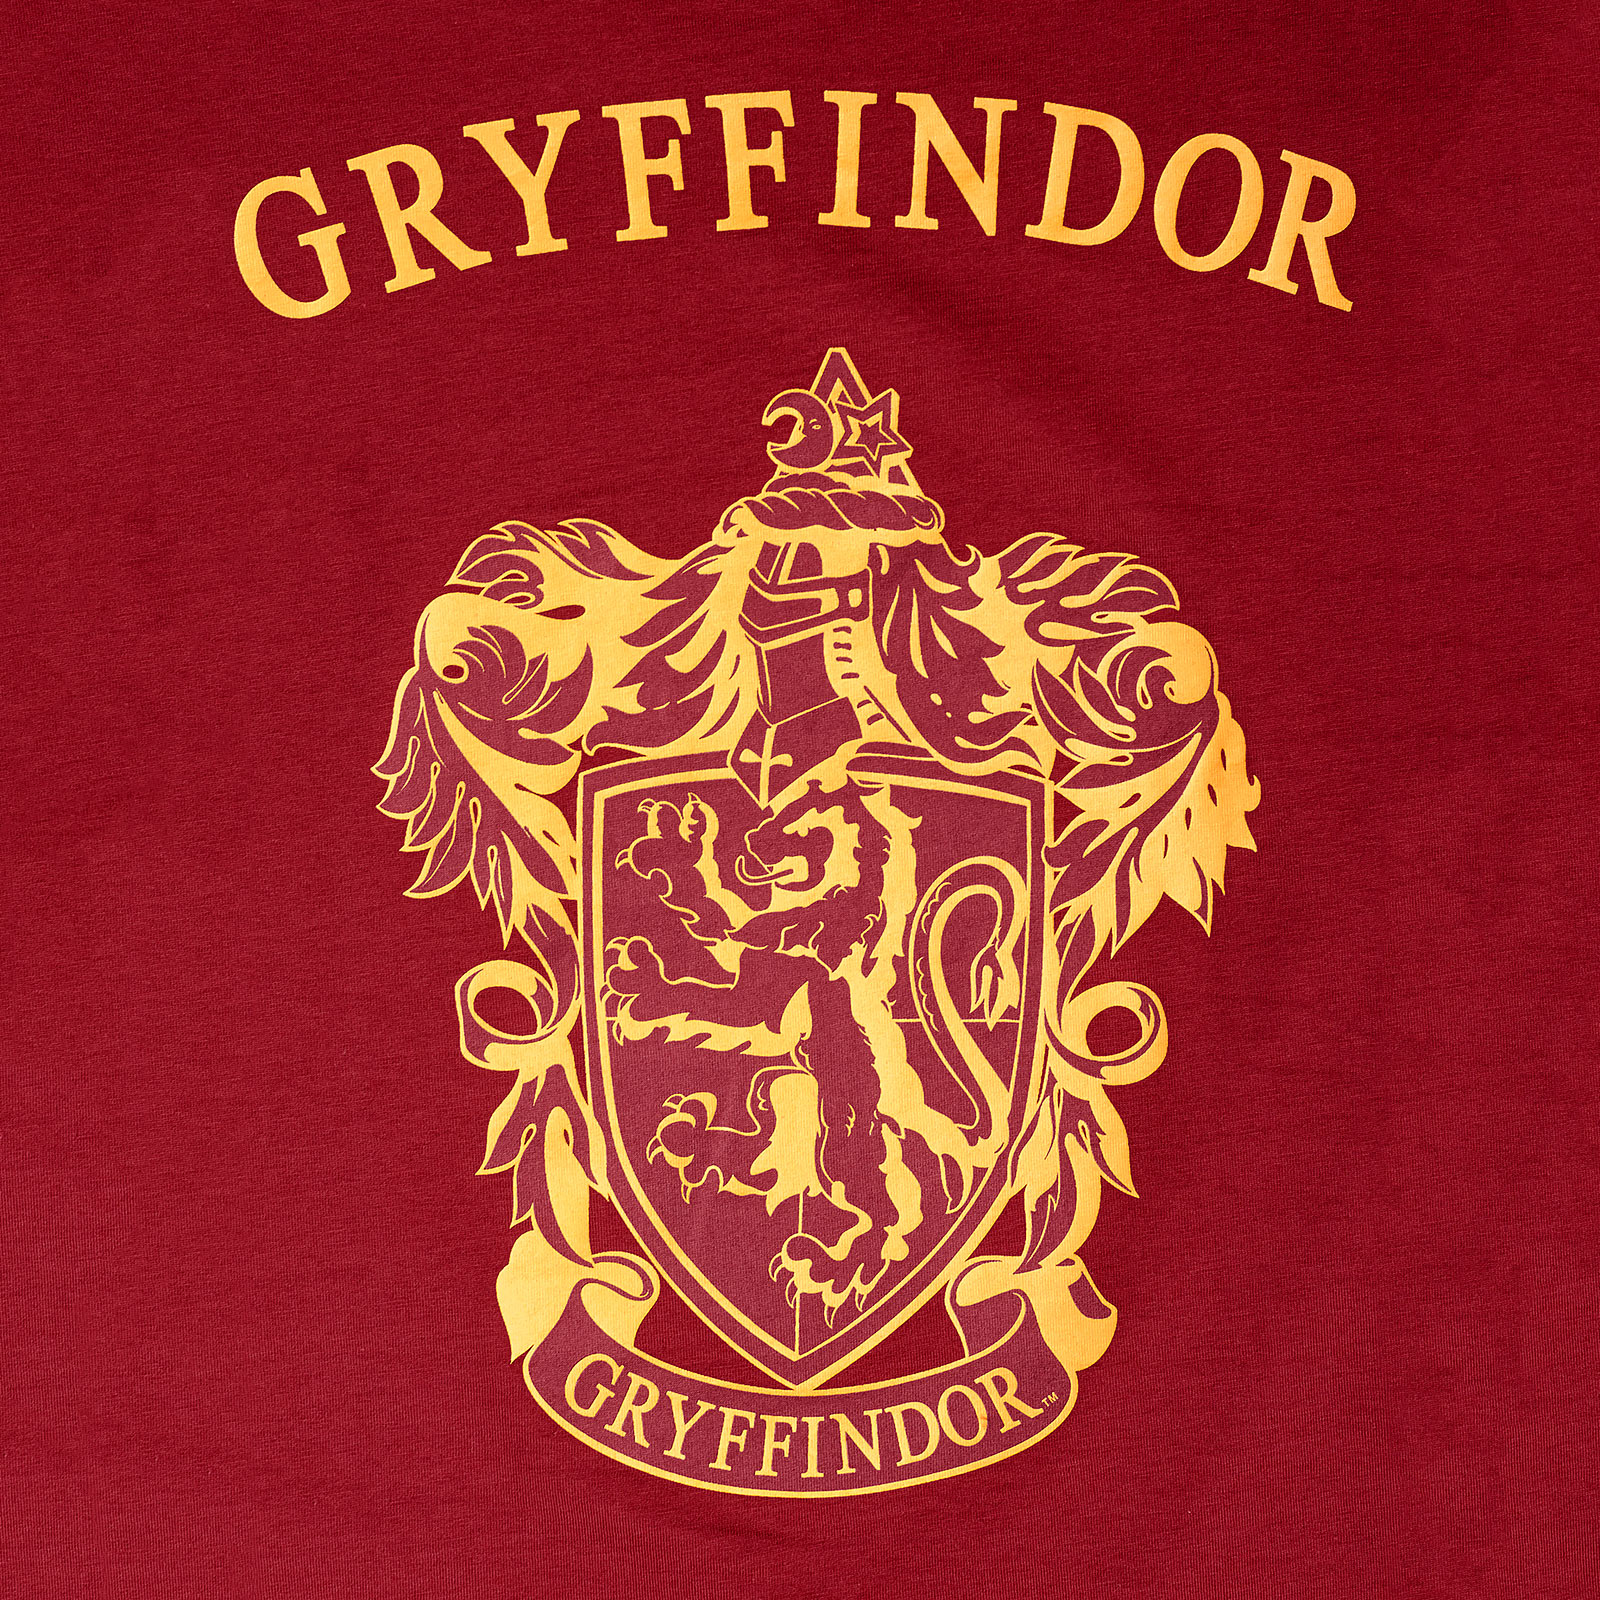 Harry Potter - Gryffindor Short Pyjamas for Women